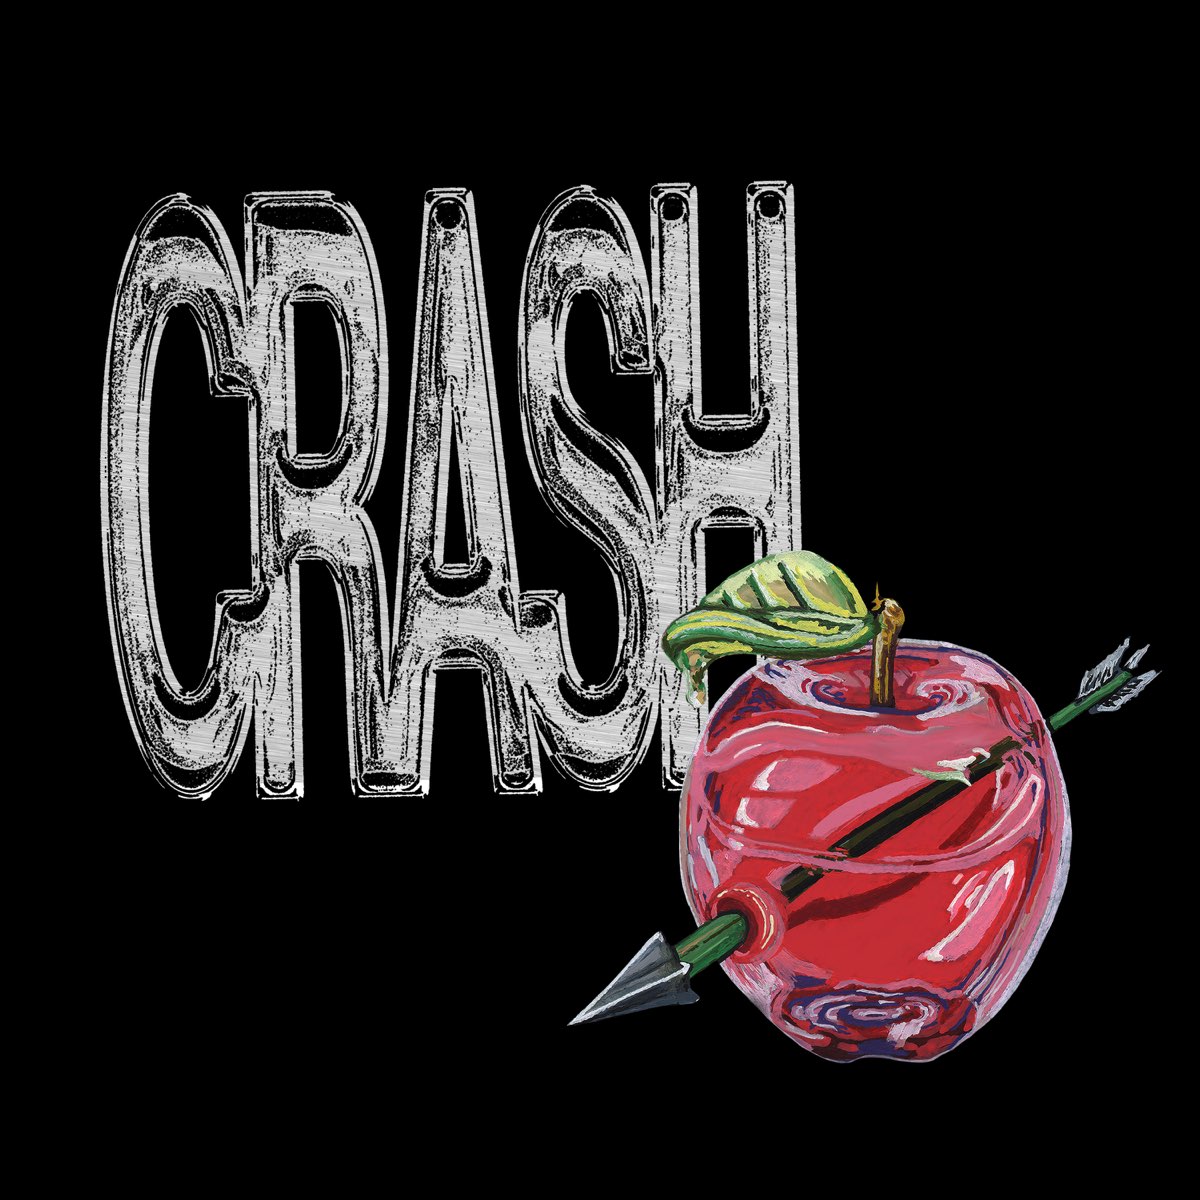 Ready go to ... https://music.apple.com/th/album/crash-single/1614033984 [ Crash - Single by Alexander 23 on Apple Music]